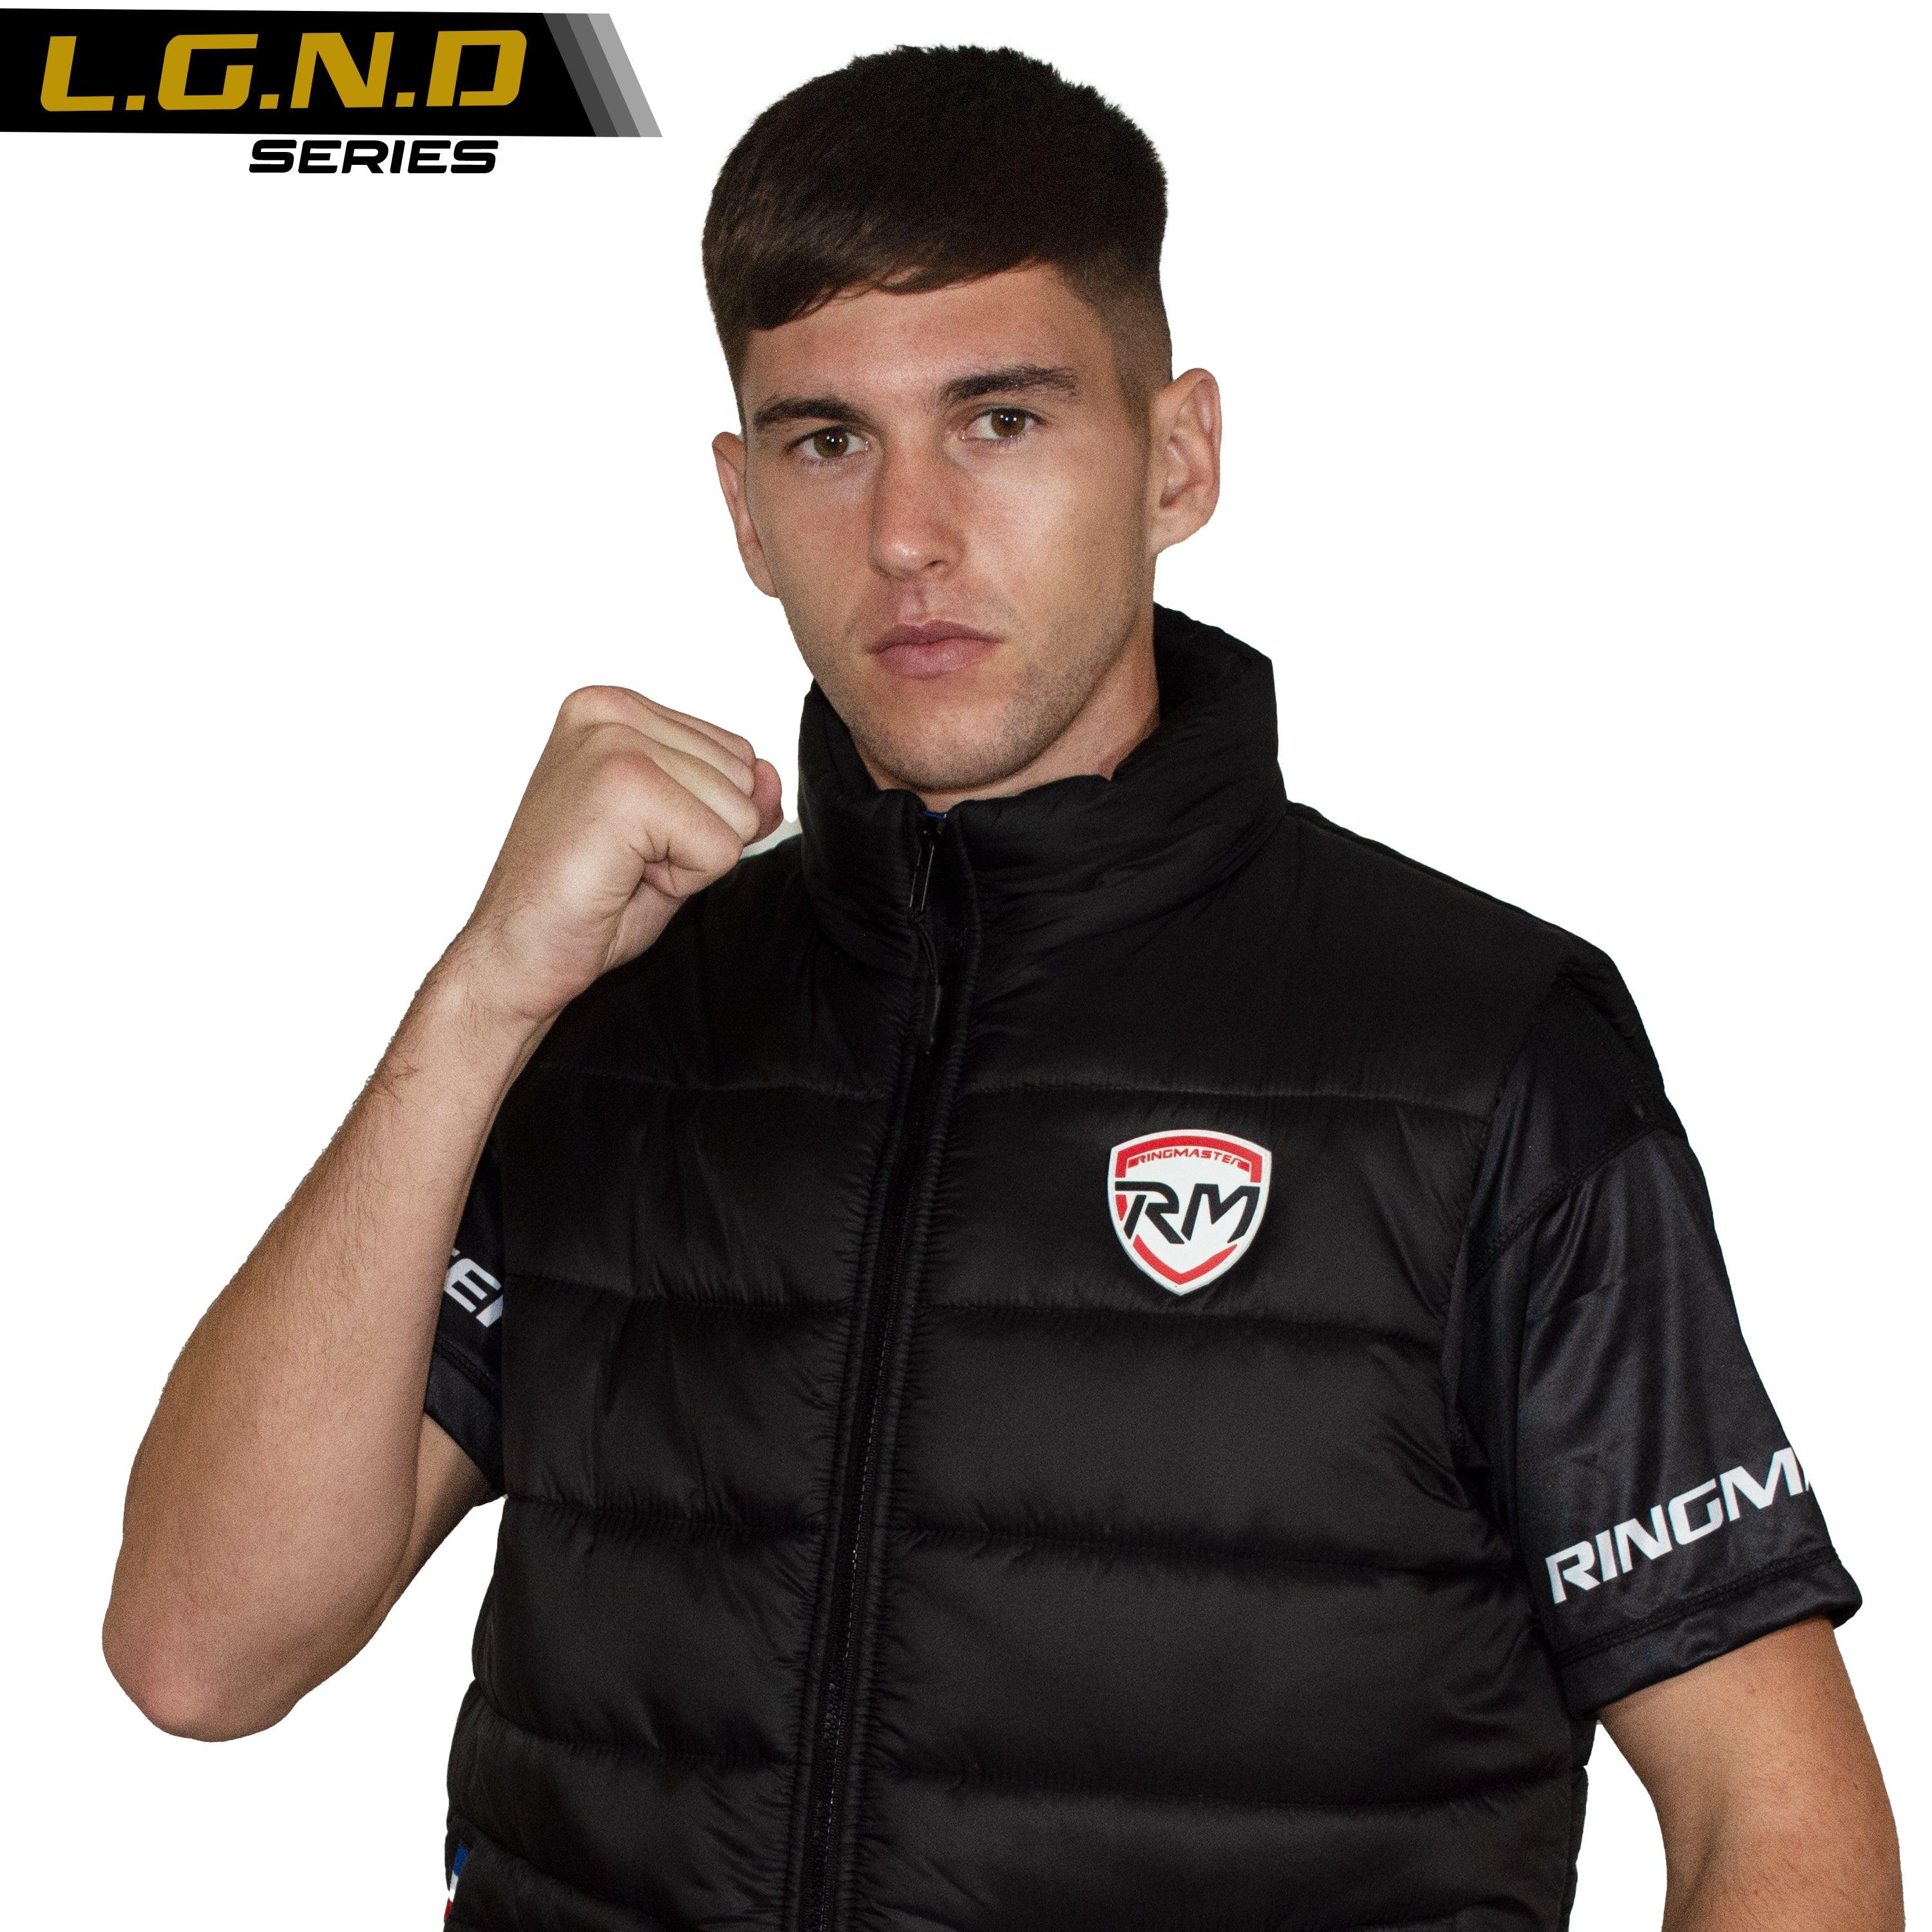 RingMaster Sports Gilet Jacket L.G.N.D Series Black - RINGMASTER SPORTS - Made For Champions